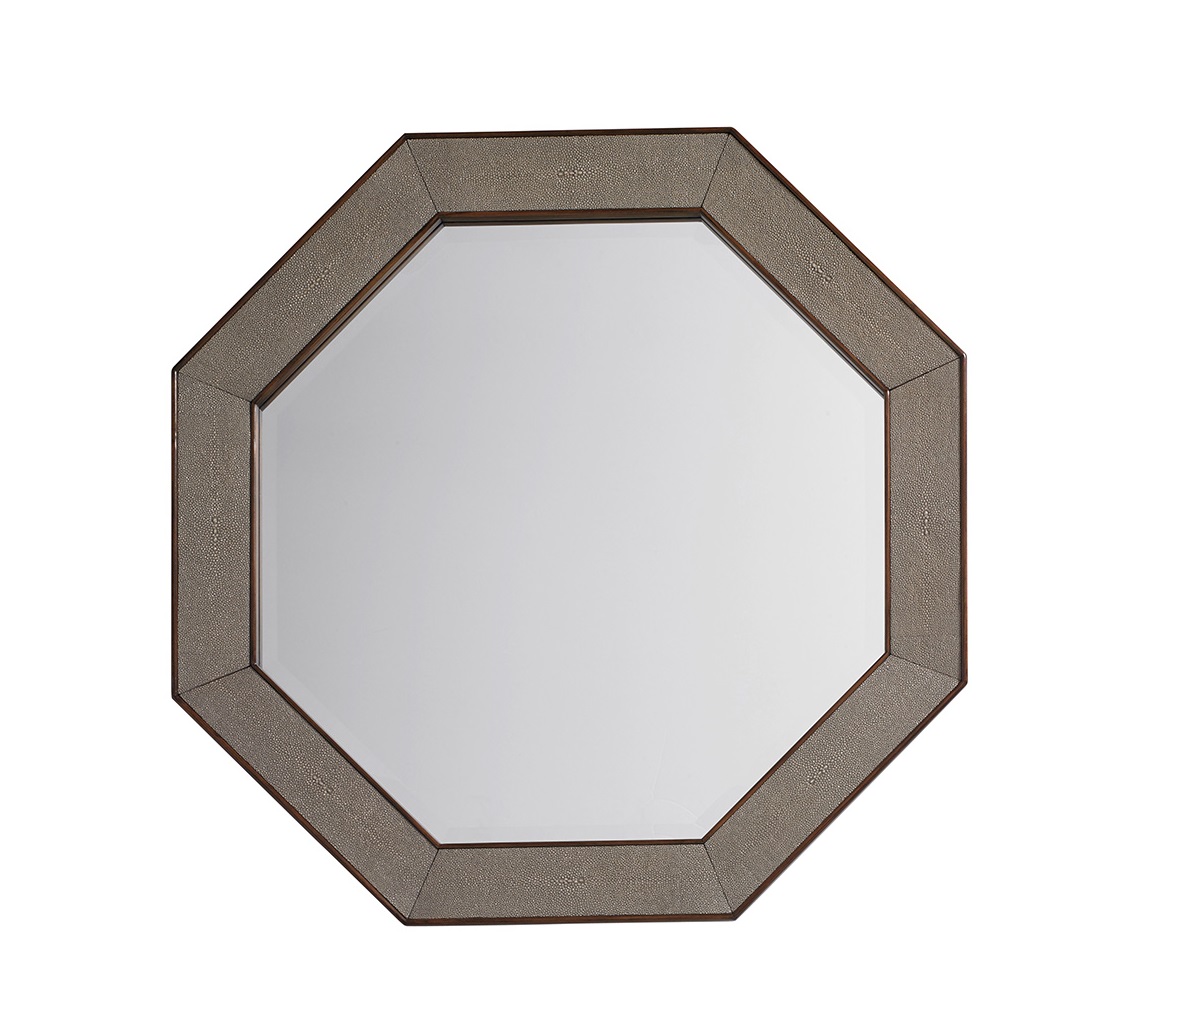 Macarthur Riva Octagonal Mirror, Lexington Cheap Decorative Mirrors For Living Room